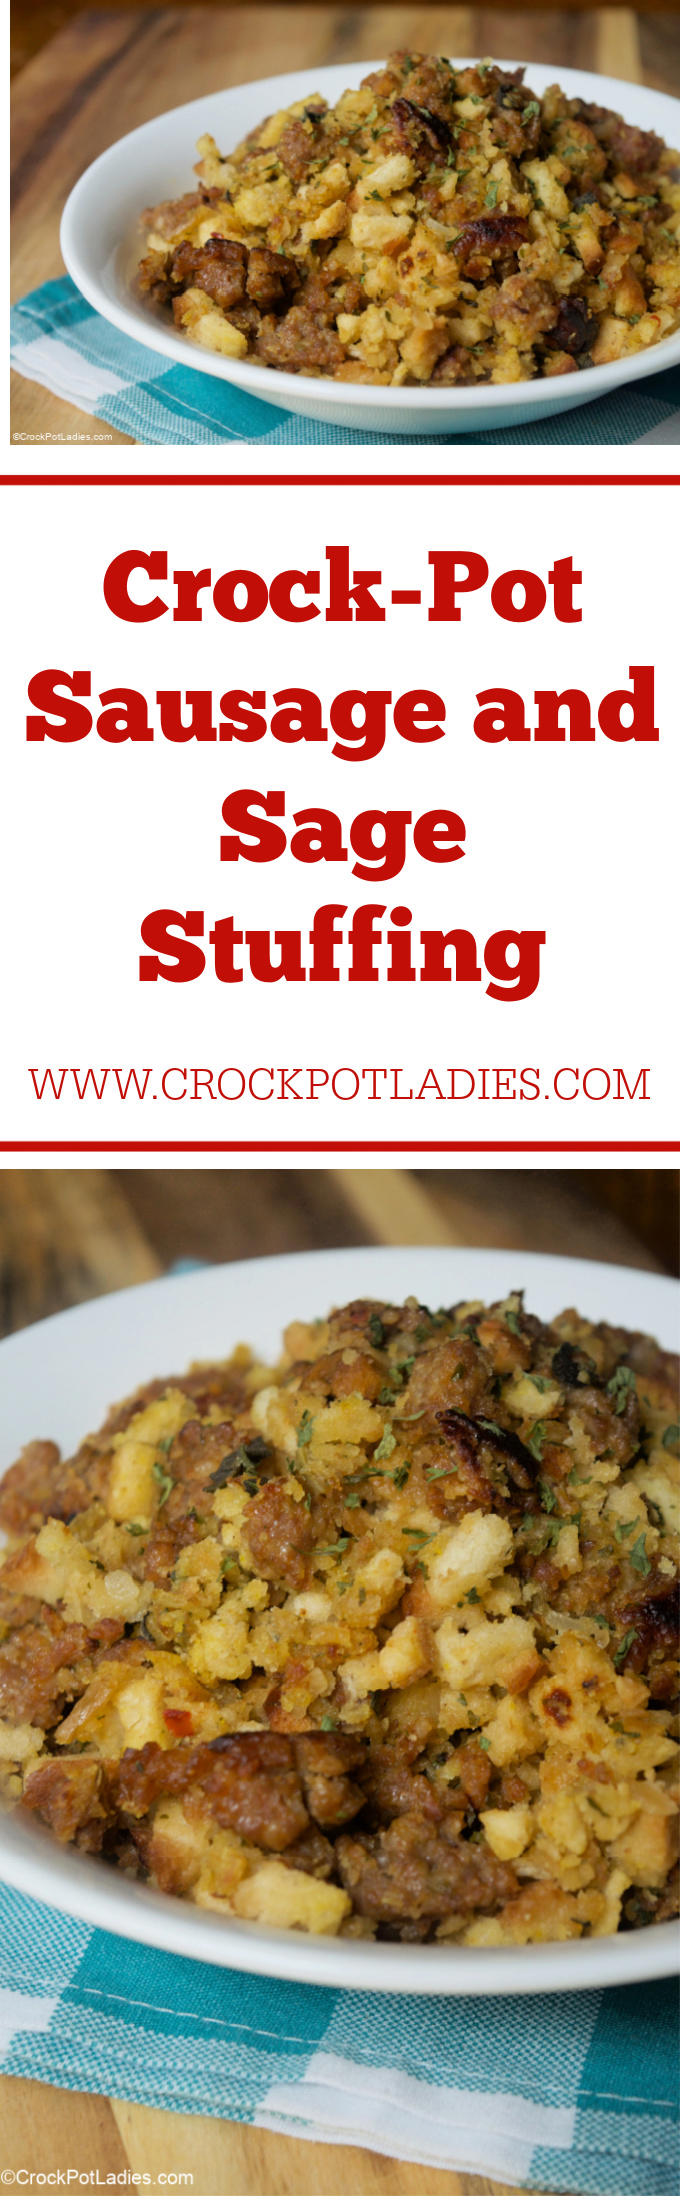 Crock-Pot Sausage and Sage Stuffing